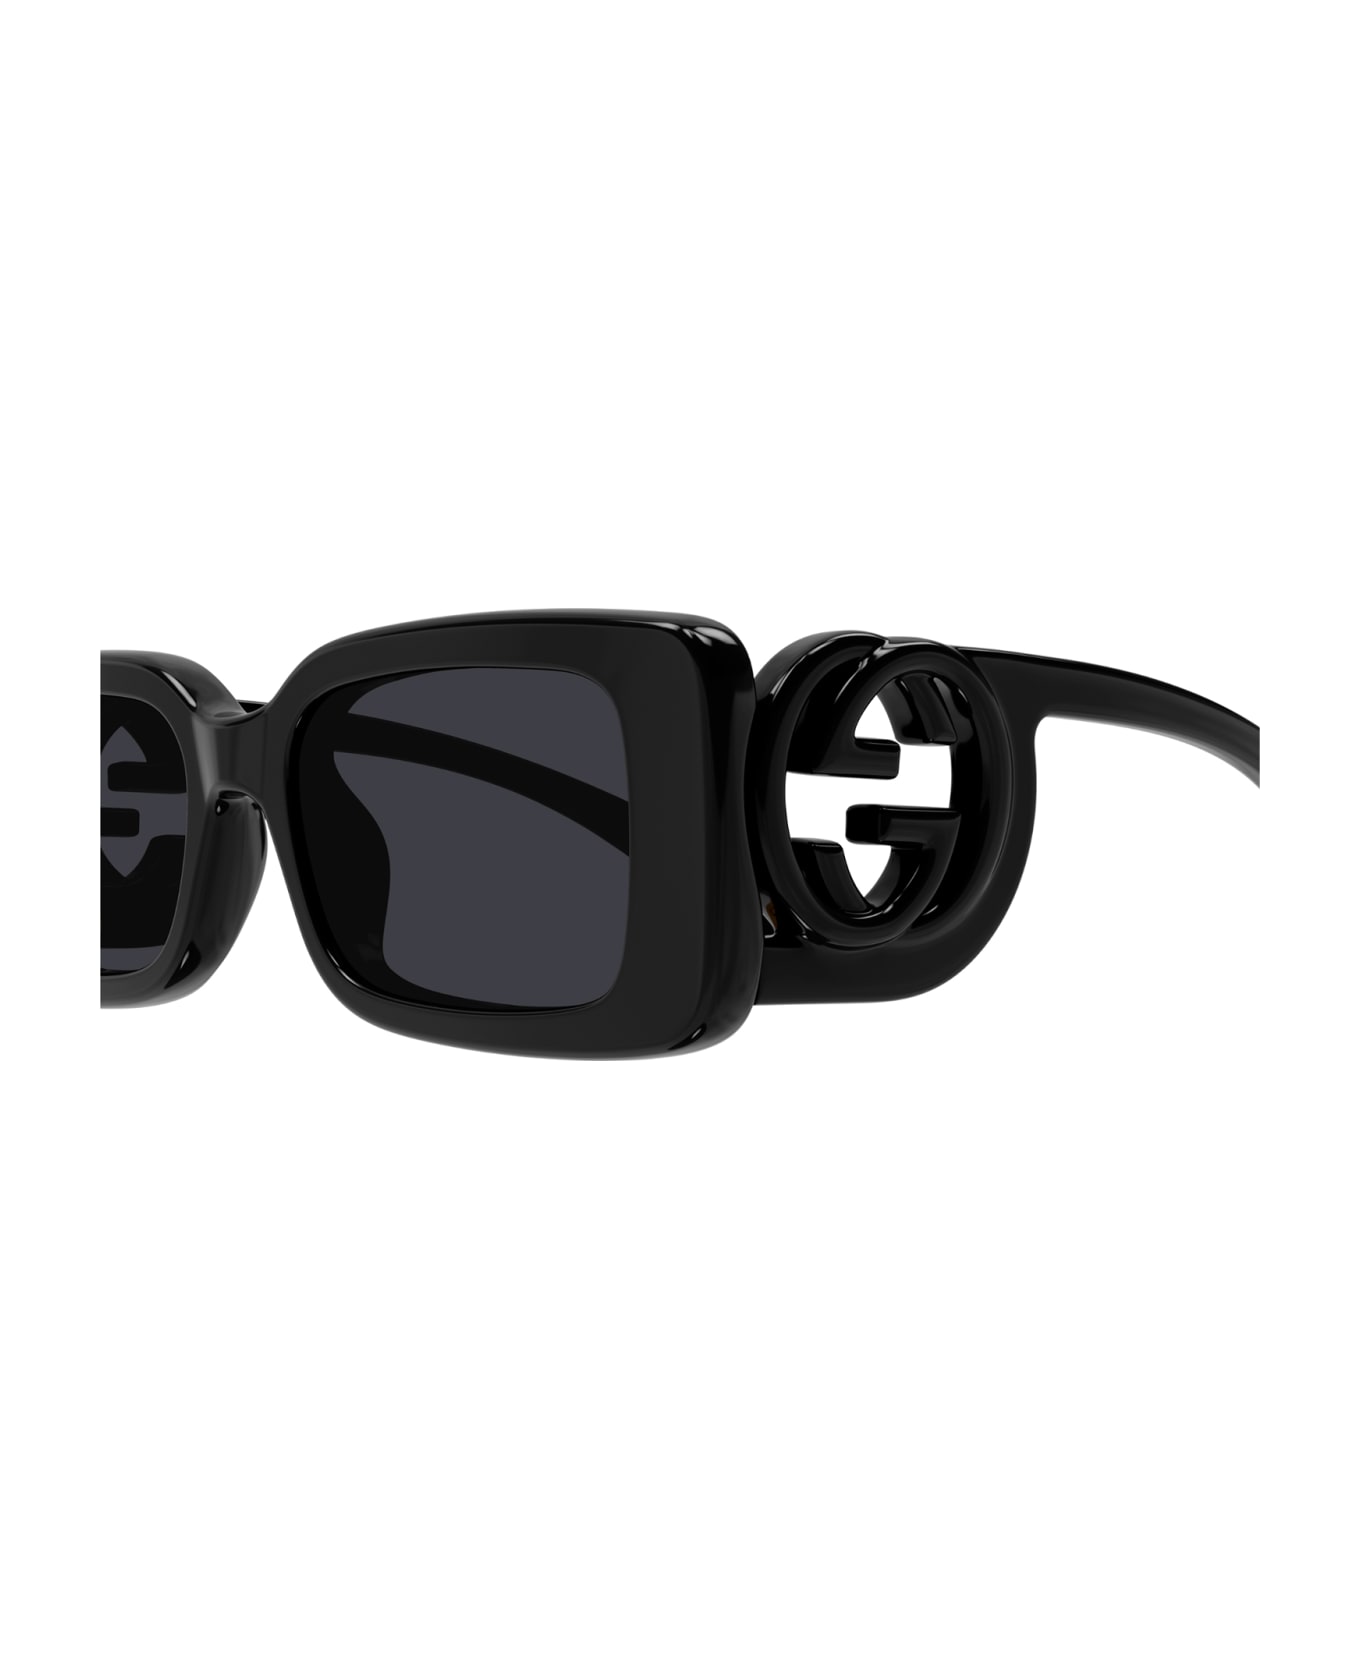 Gucci Eyewear Gg1325s Sunglasses - 001 black black grey